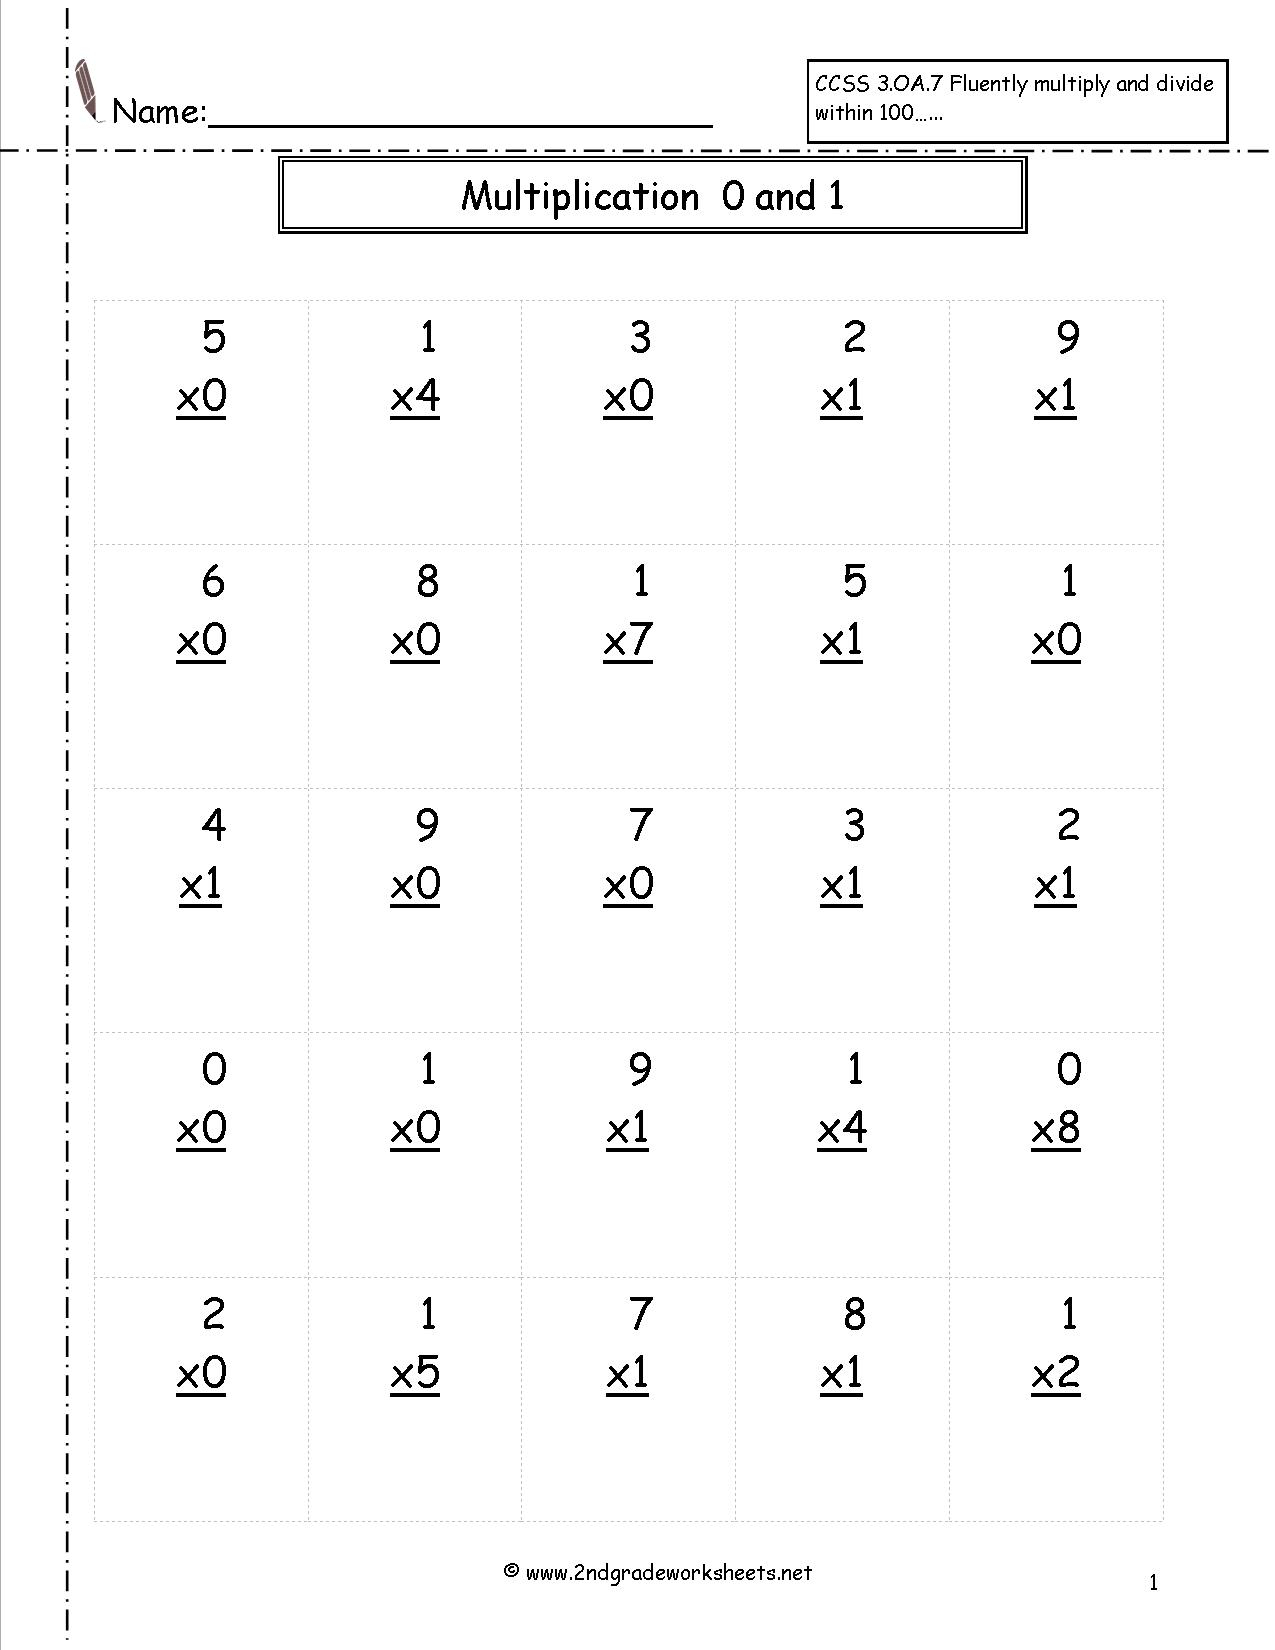 Multiplication Worksheets And Printouts inside Multiplication Printable 0